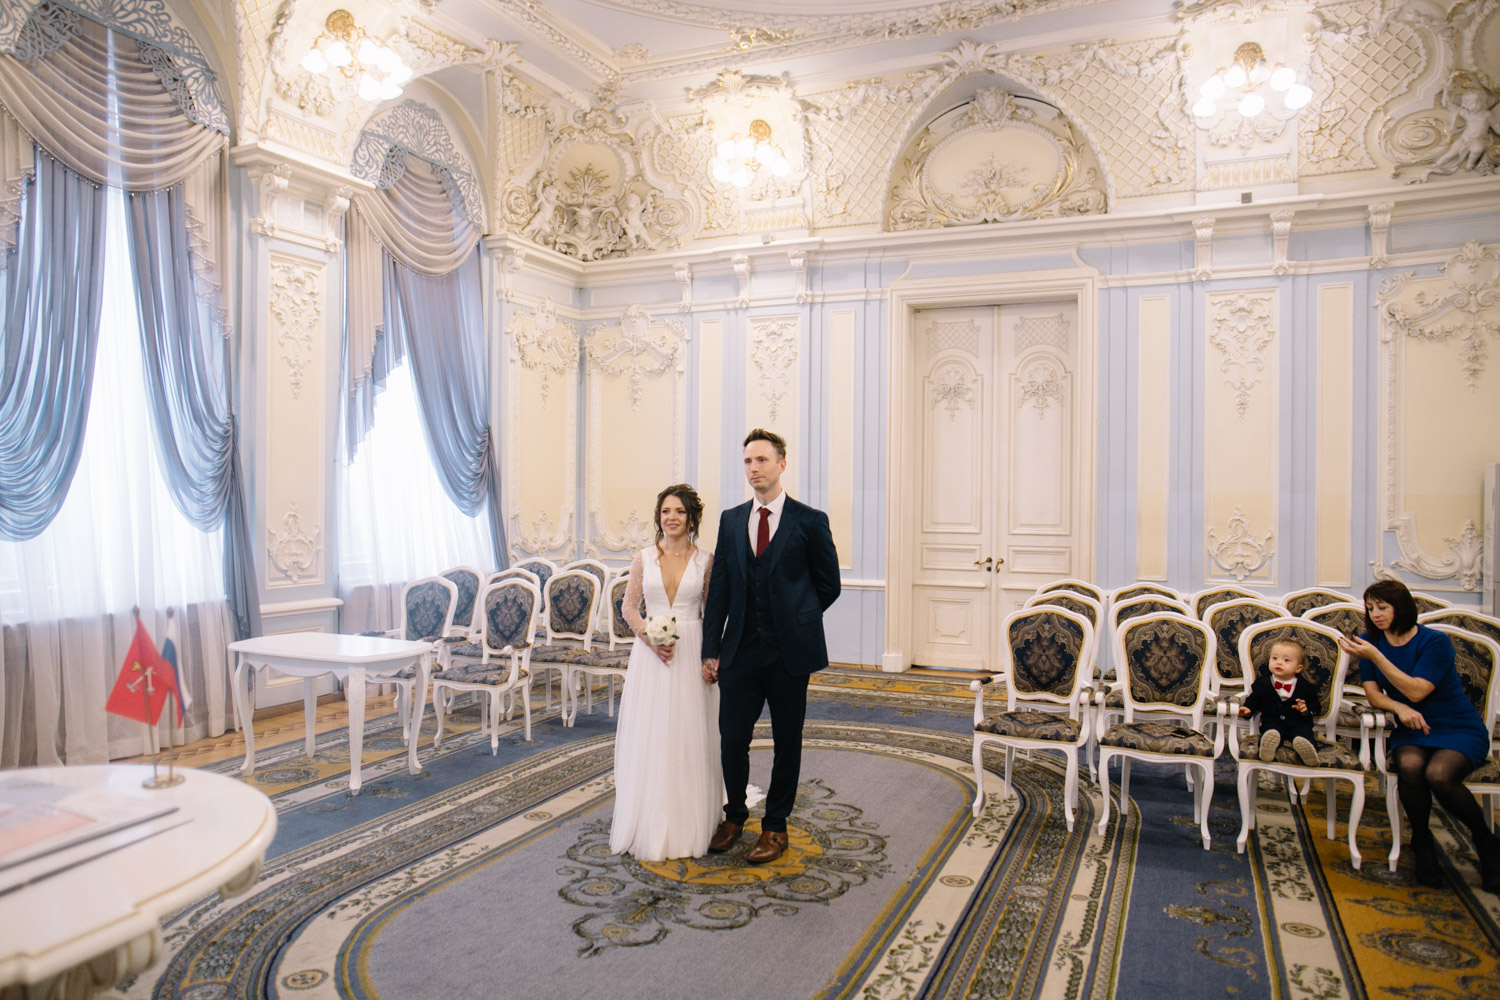  Дворец бракосочетания на фурштатской